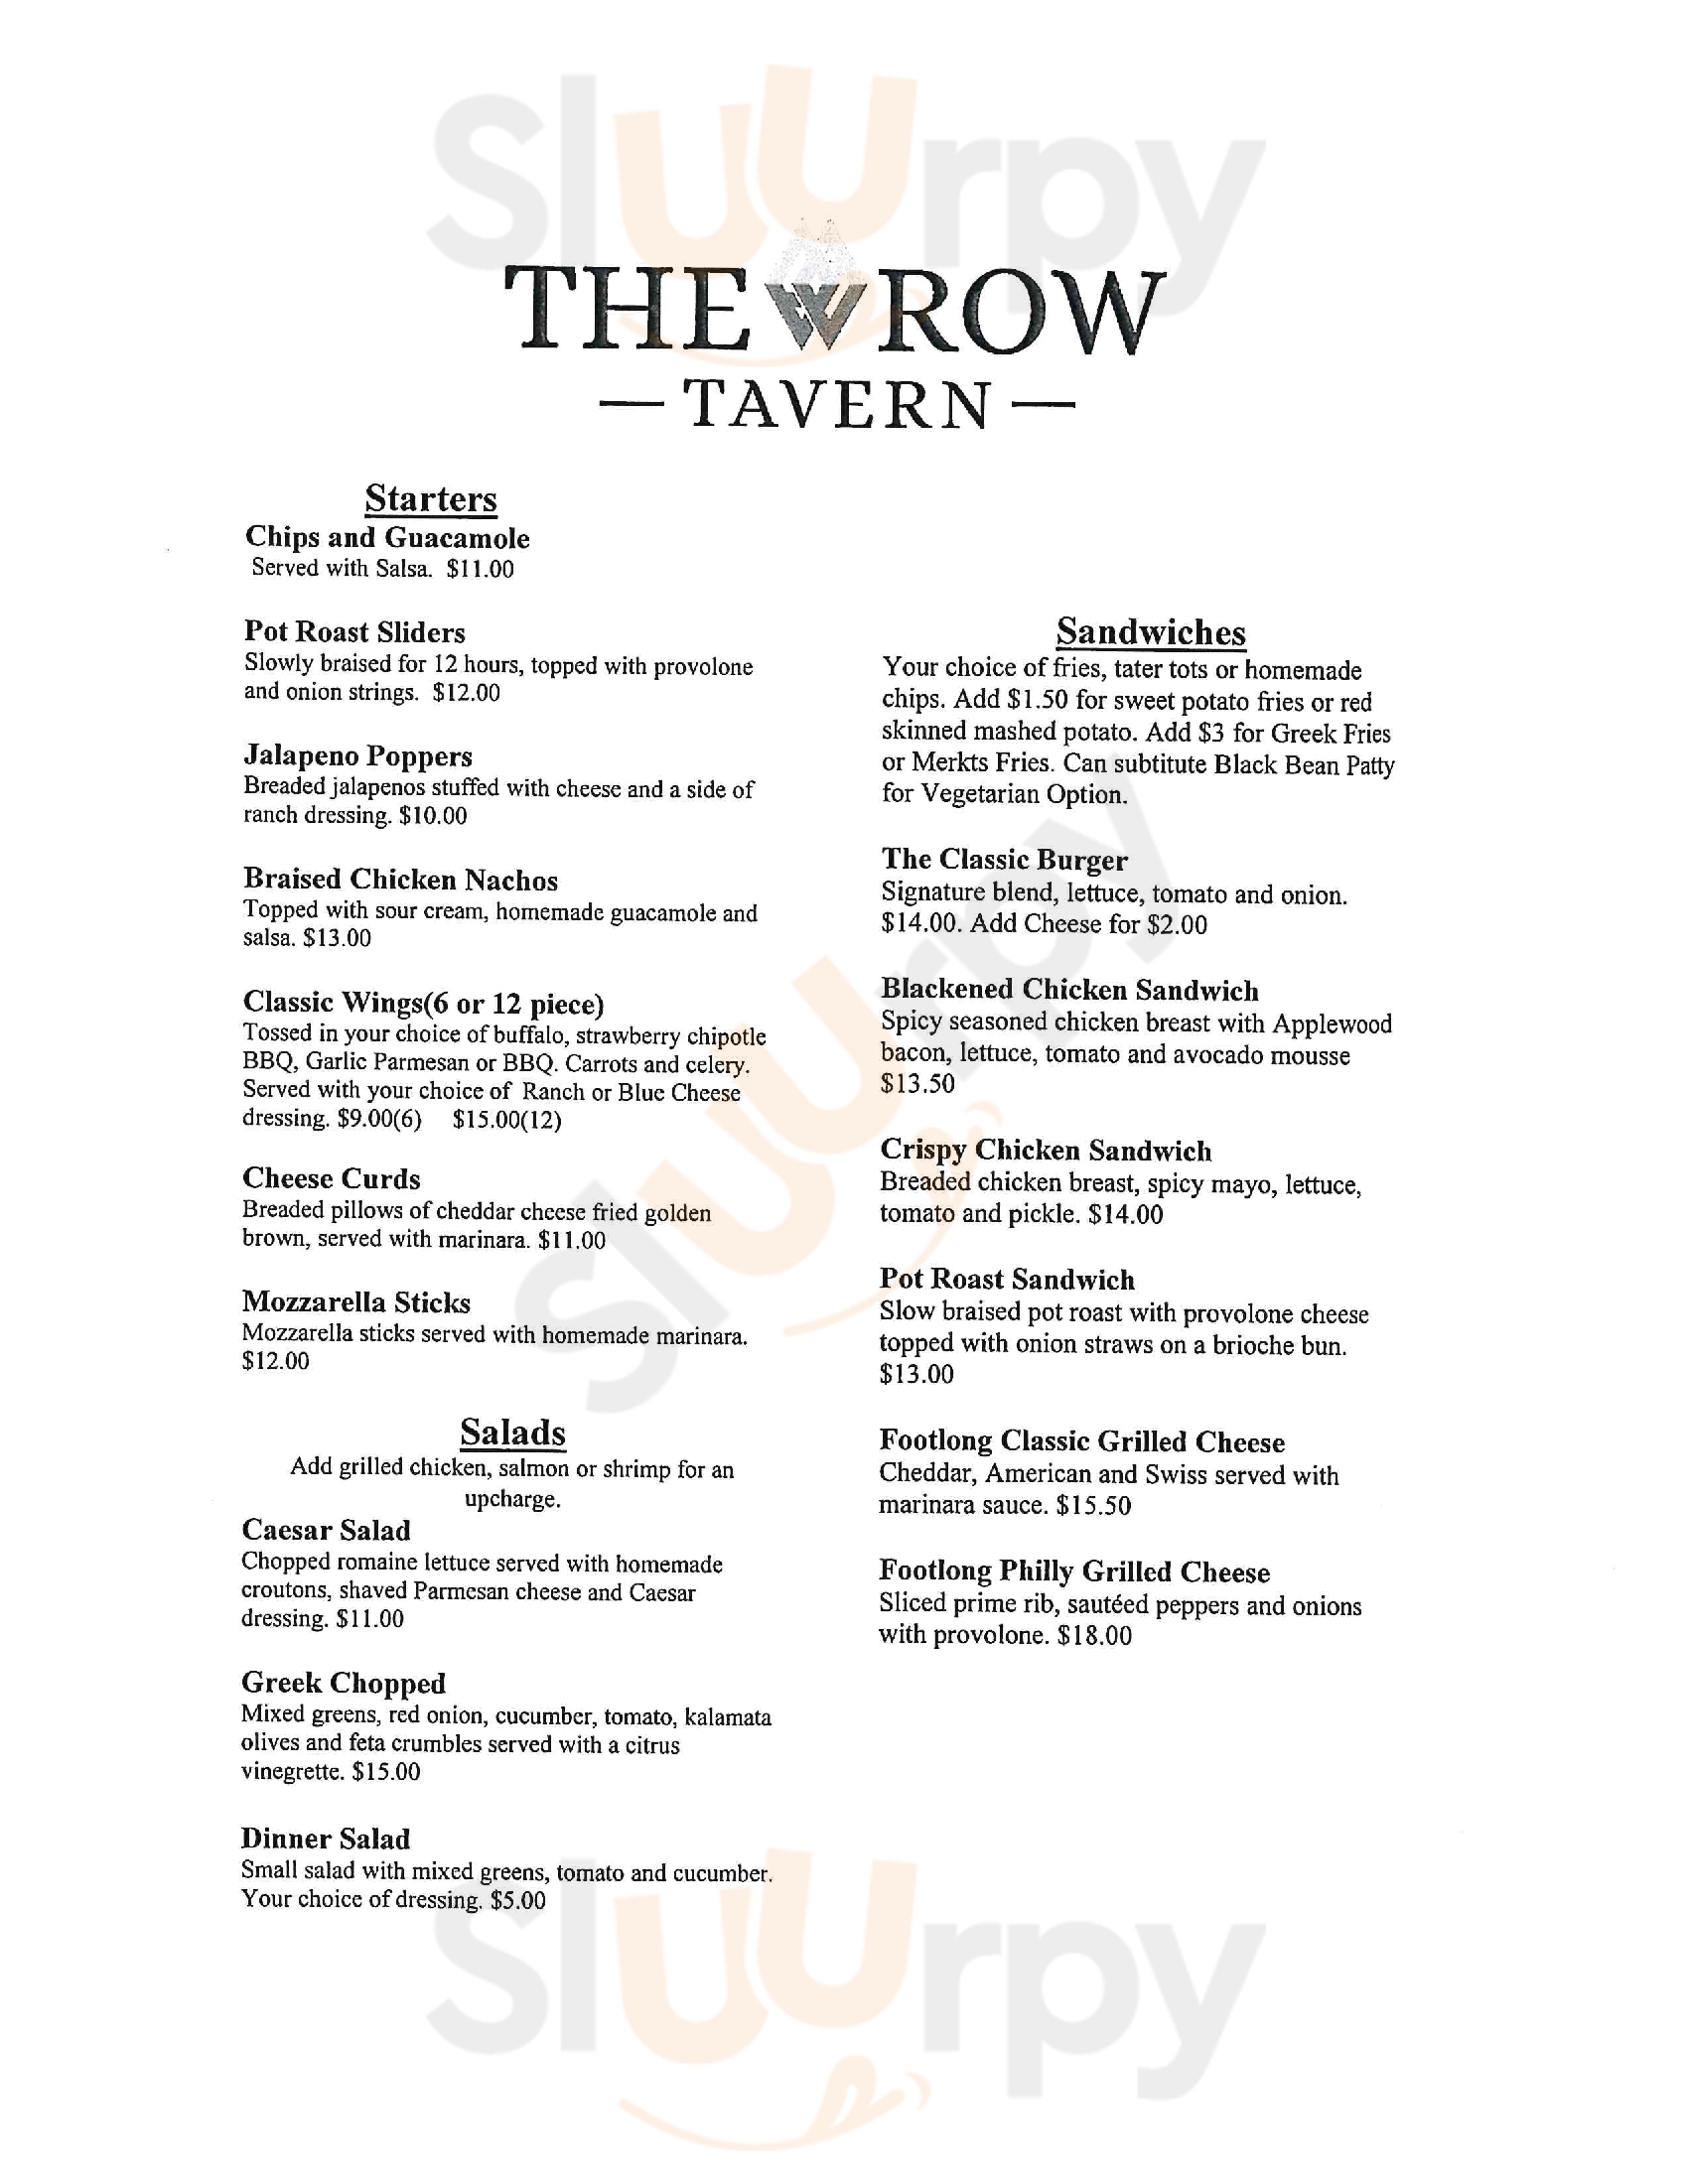 The Row Tavern Chicago Menu - 1